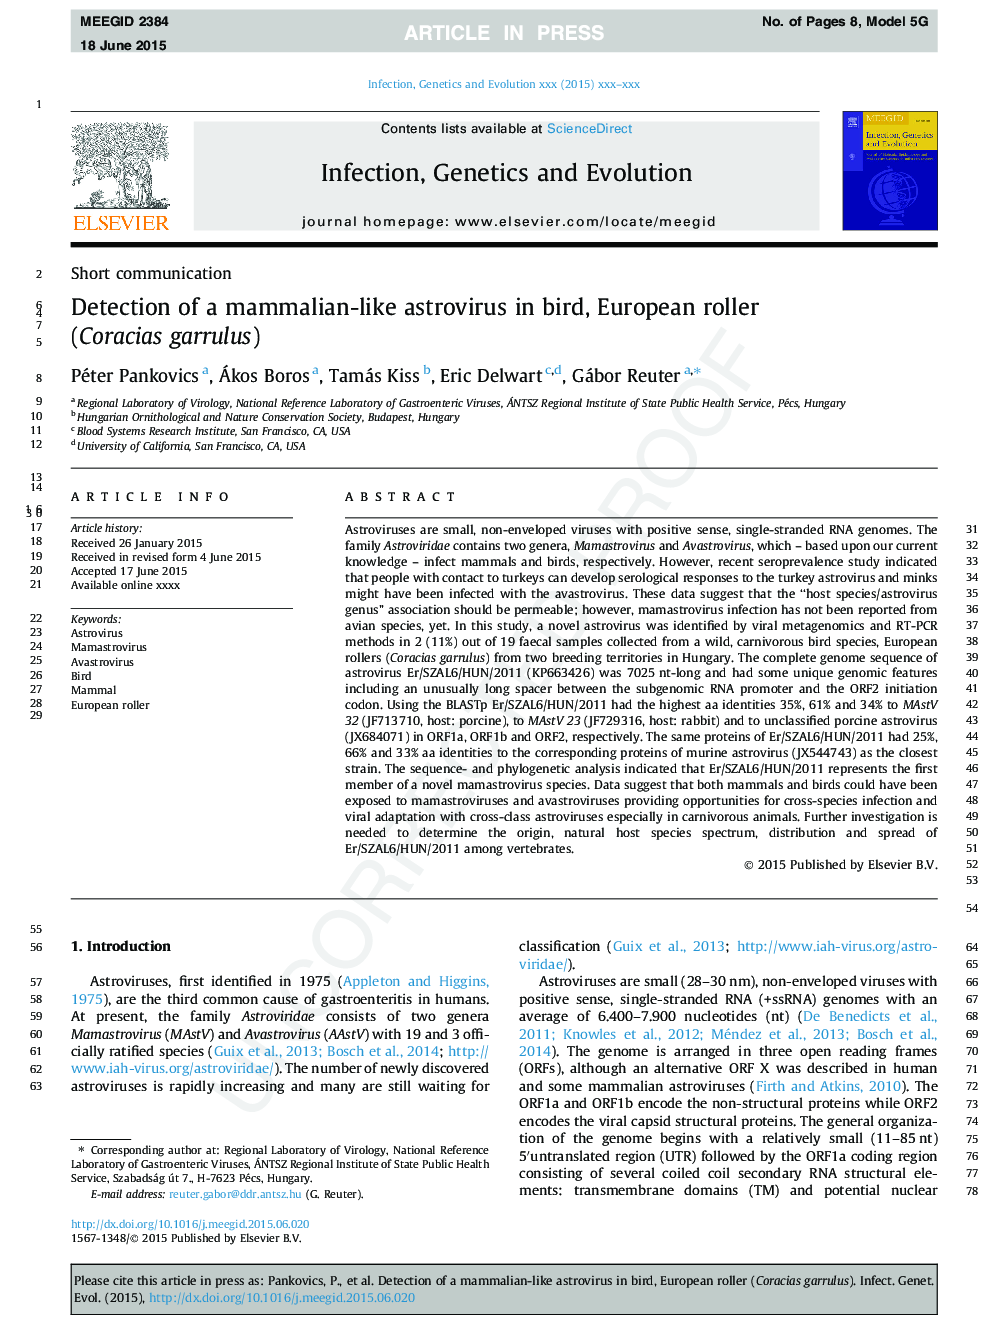 Detection of a mammalian-like astrovirus in bird, European roller (Coracias garrulus)